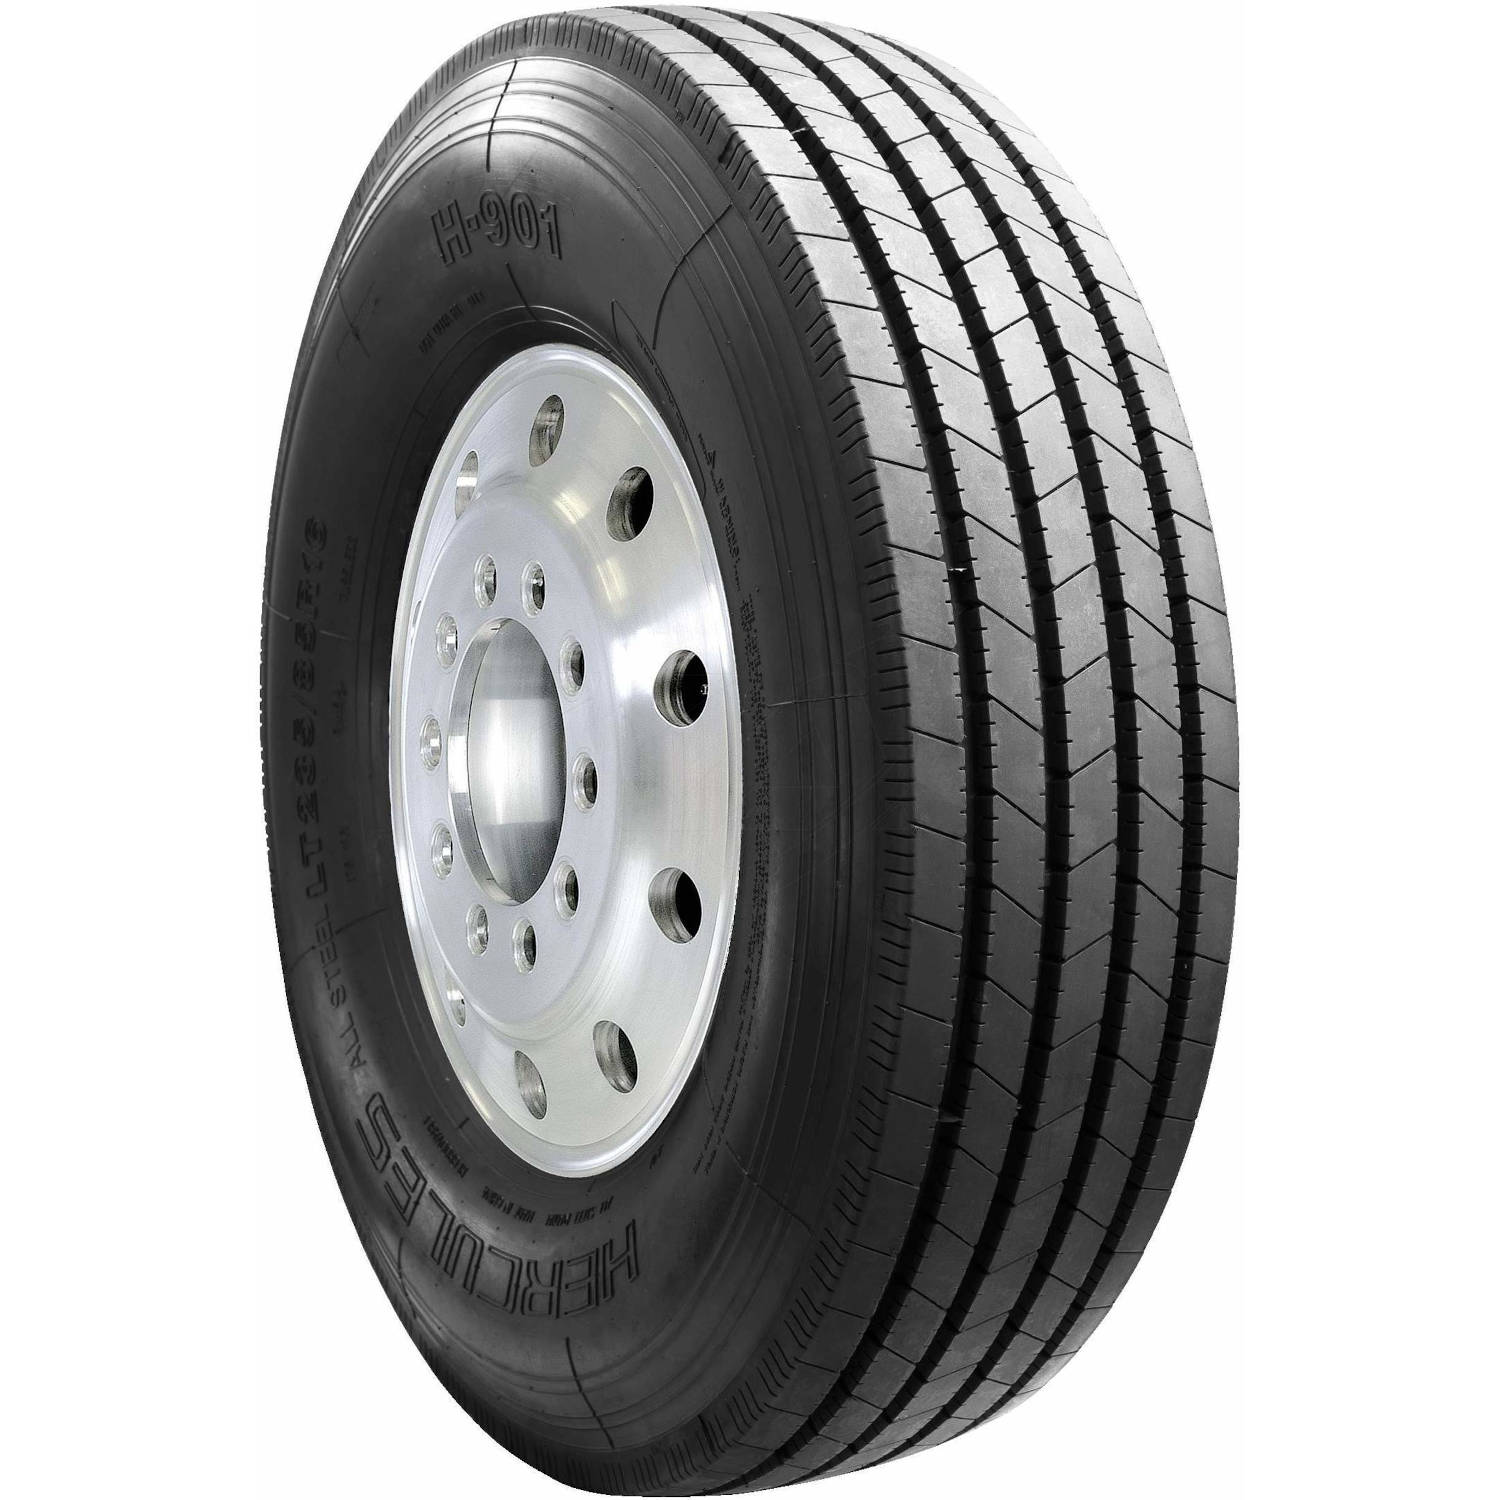 HERCULES H-901 LT225/75R16 (29.3X8.9R 16) Tires